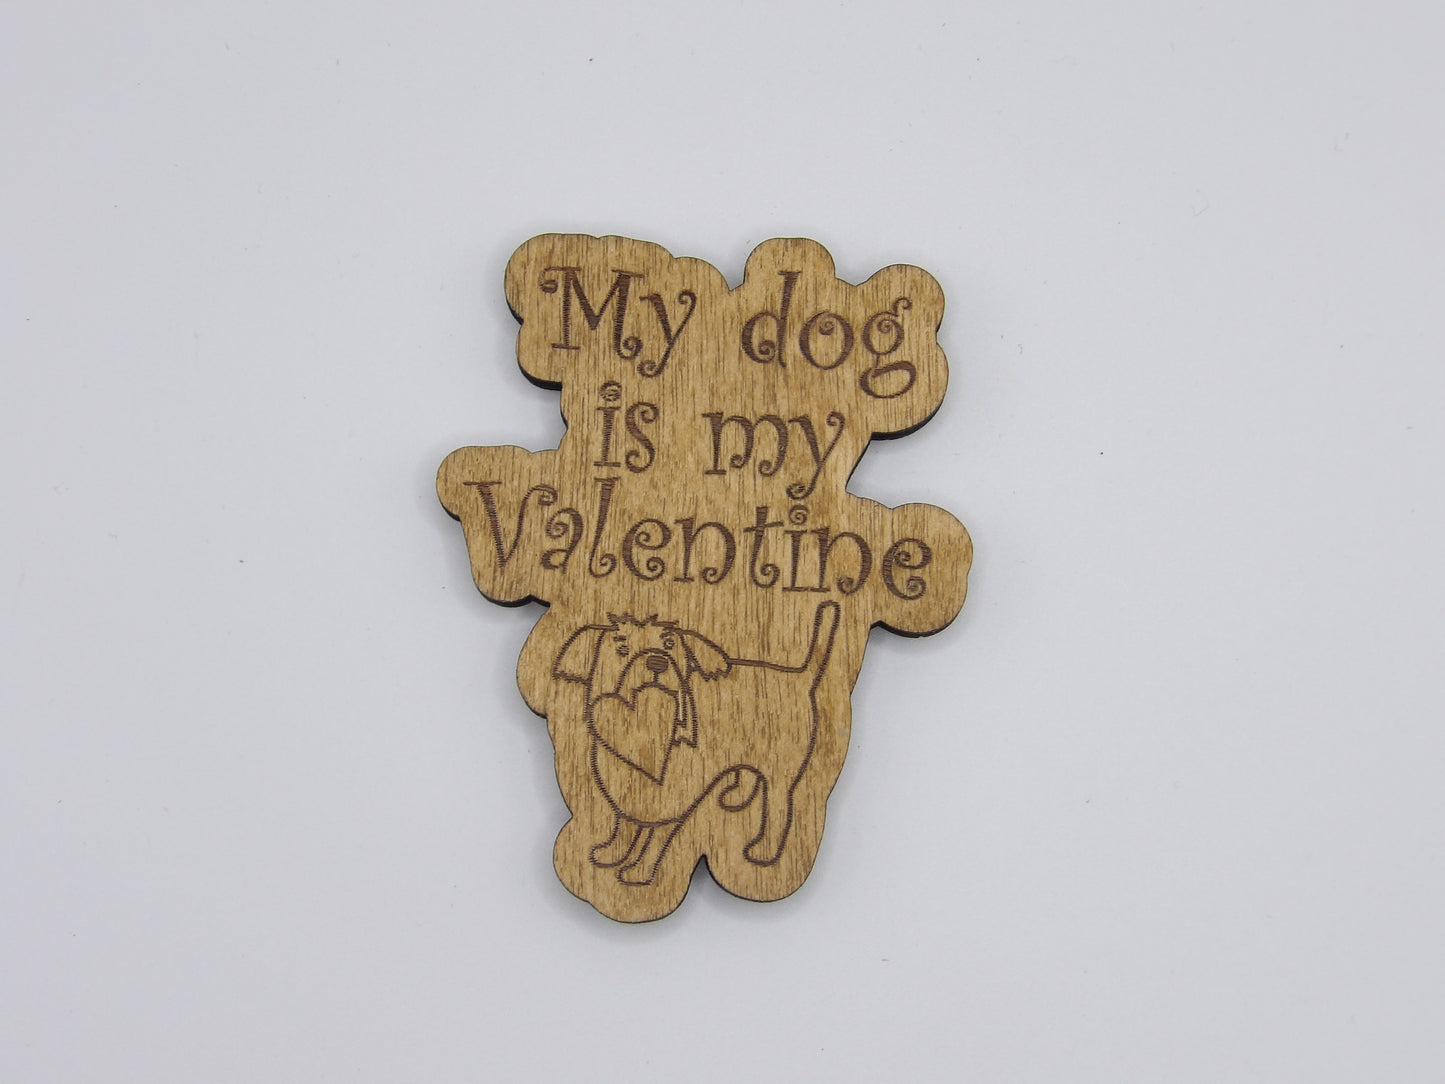 My PET is My Valentine Magnet